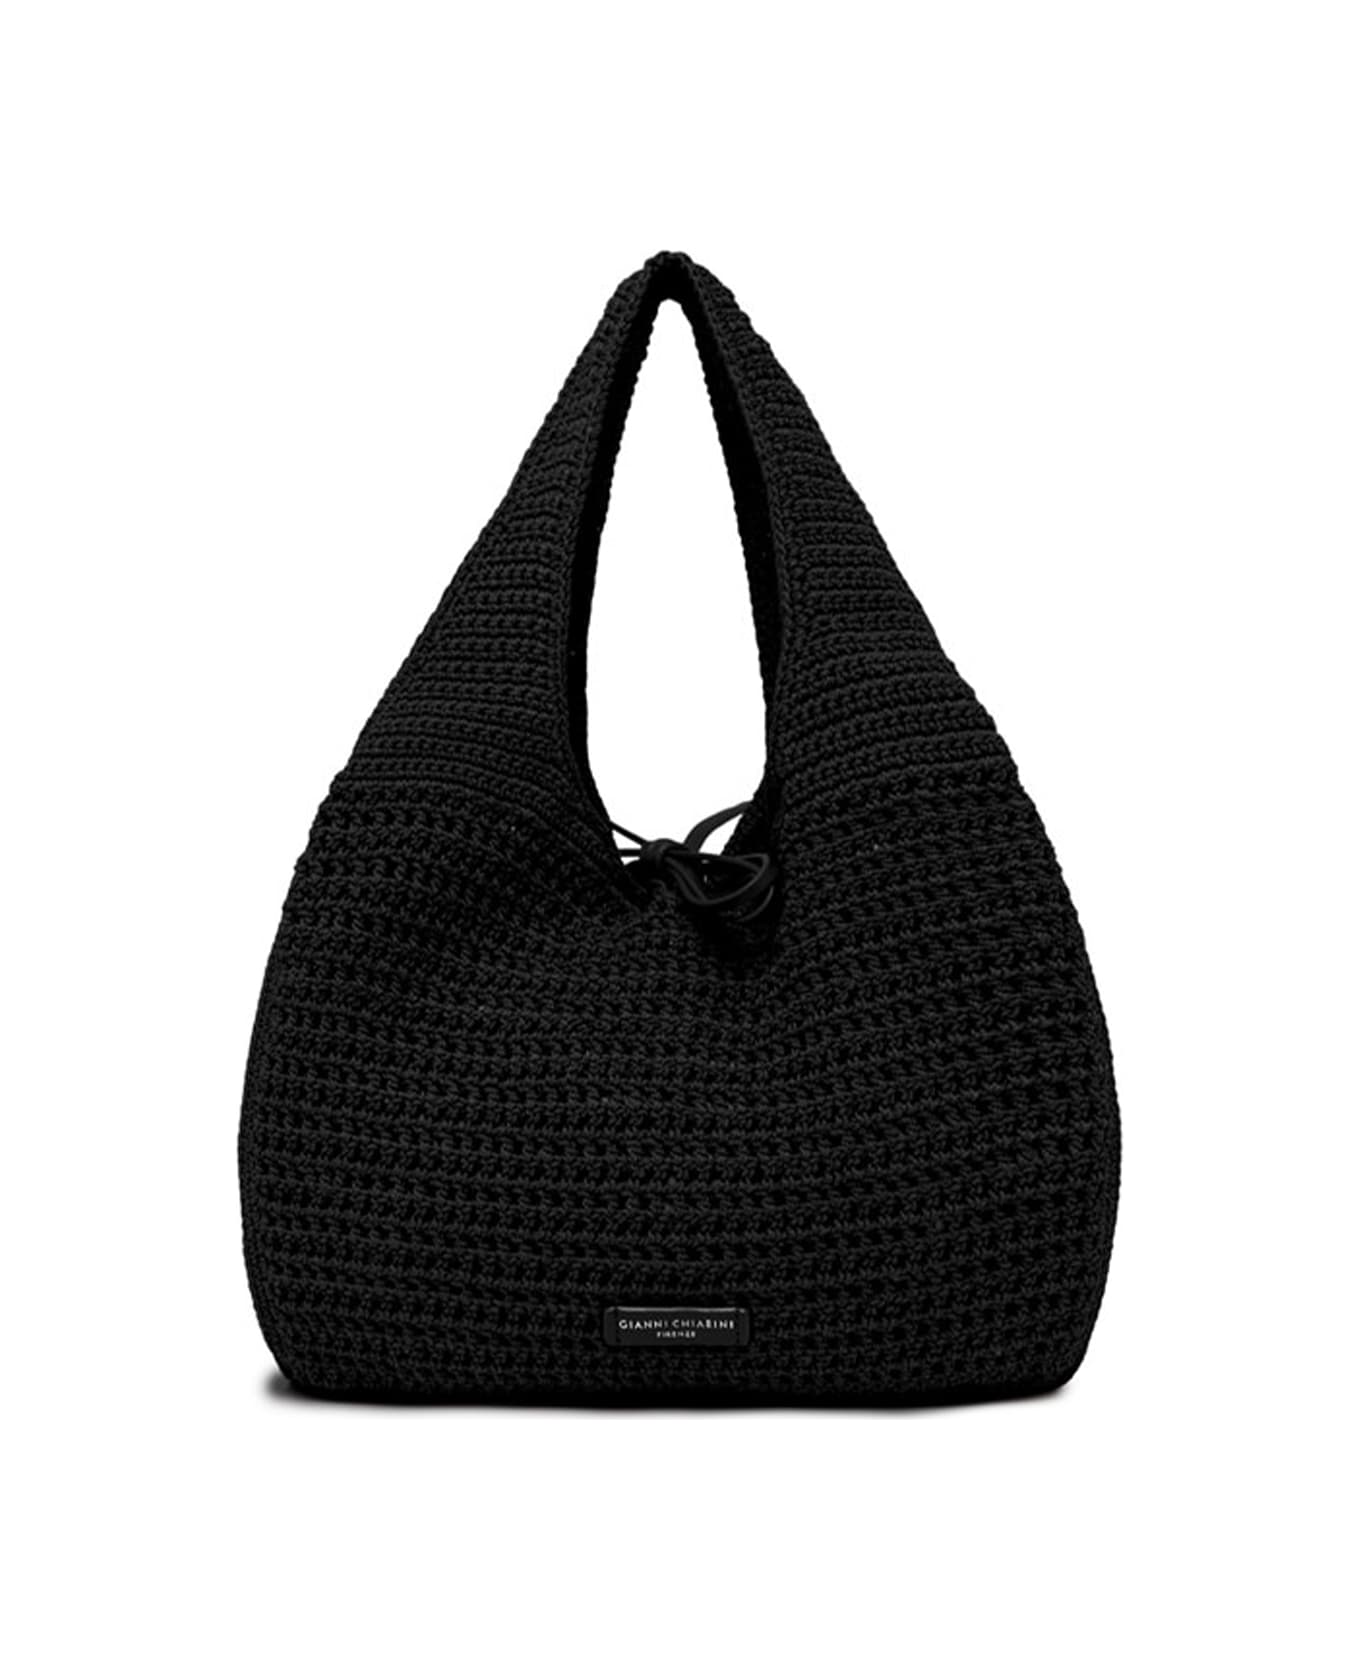 Gianni Chiarini Euforia Black Shopping Bag In Crochet Fabric - NERO